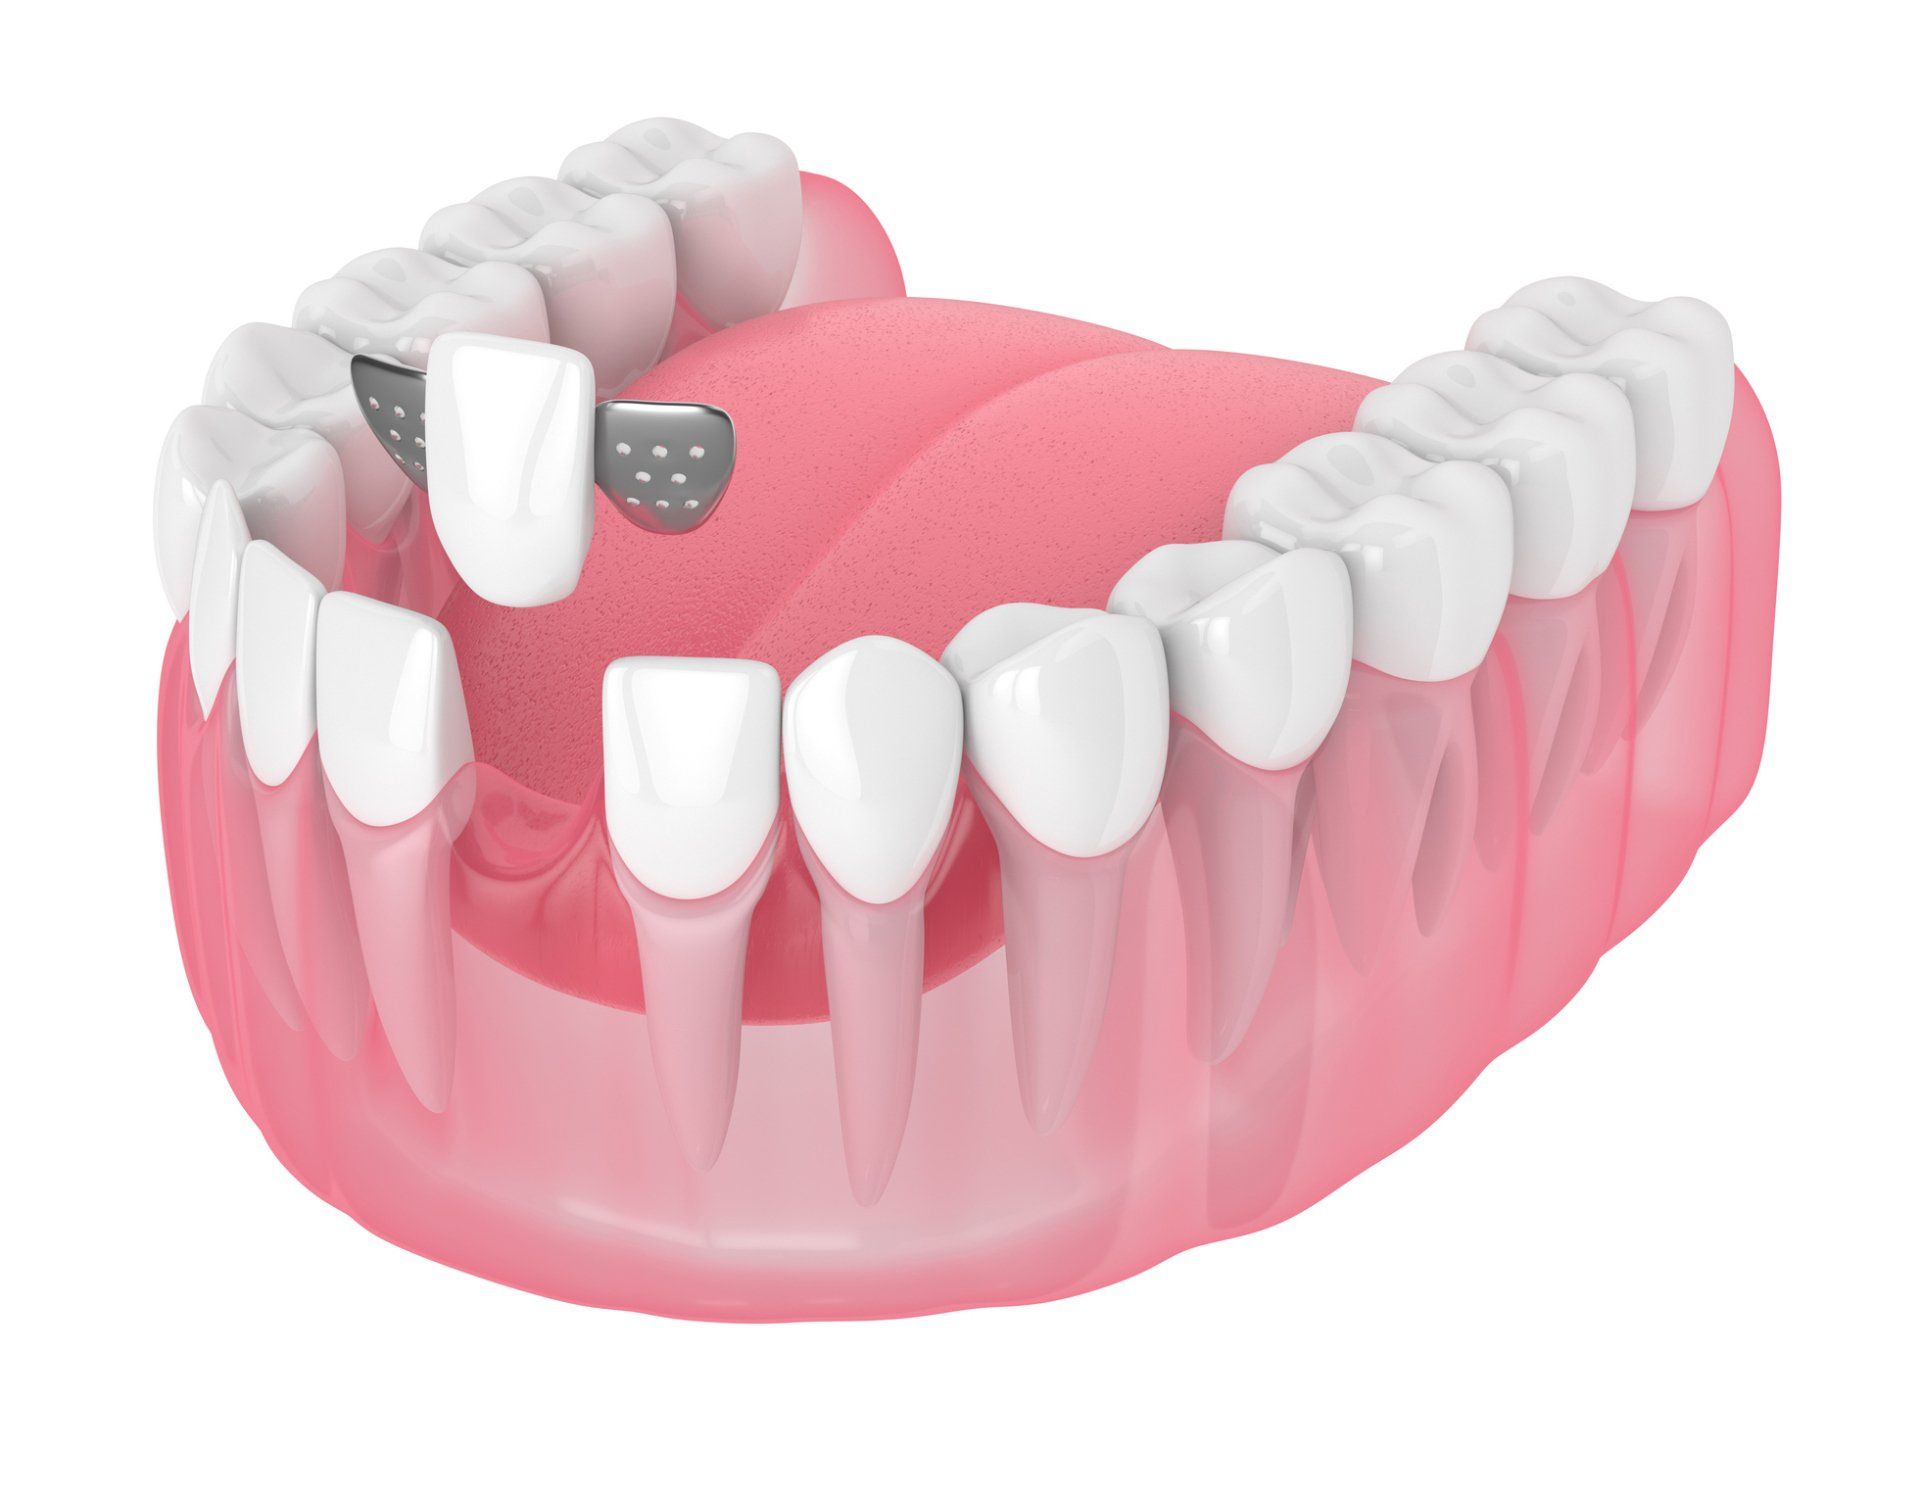 A bridge image by a dental implant service professional in Casper, Wy